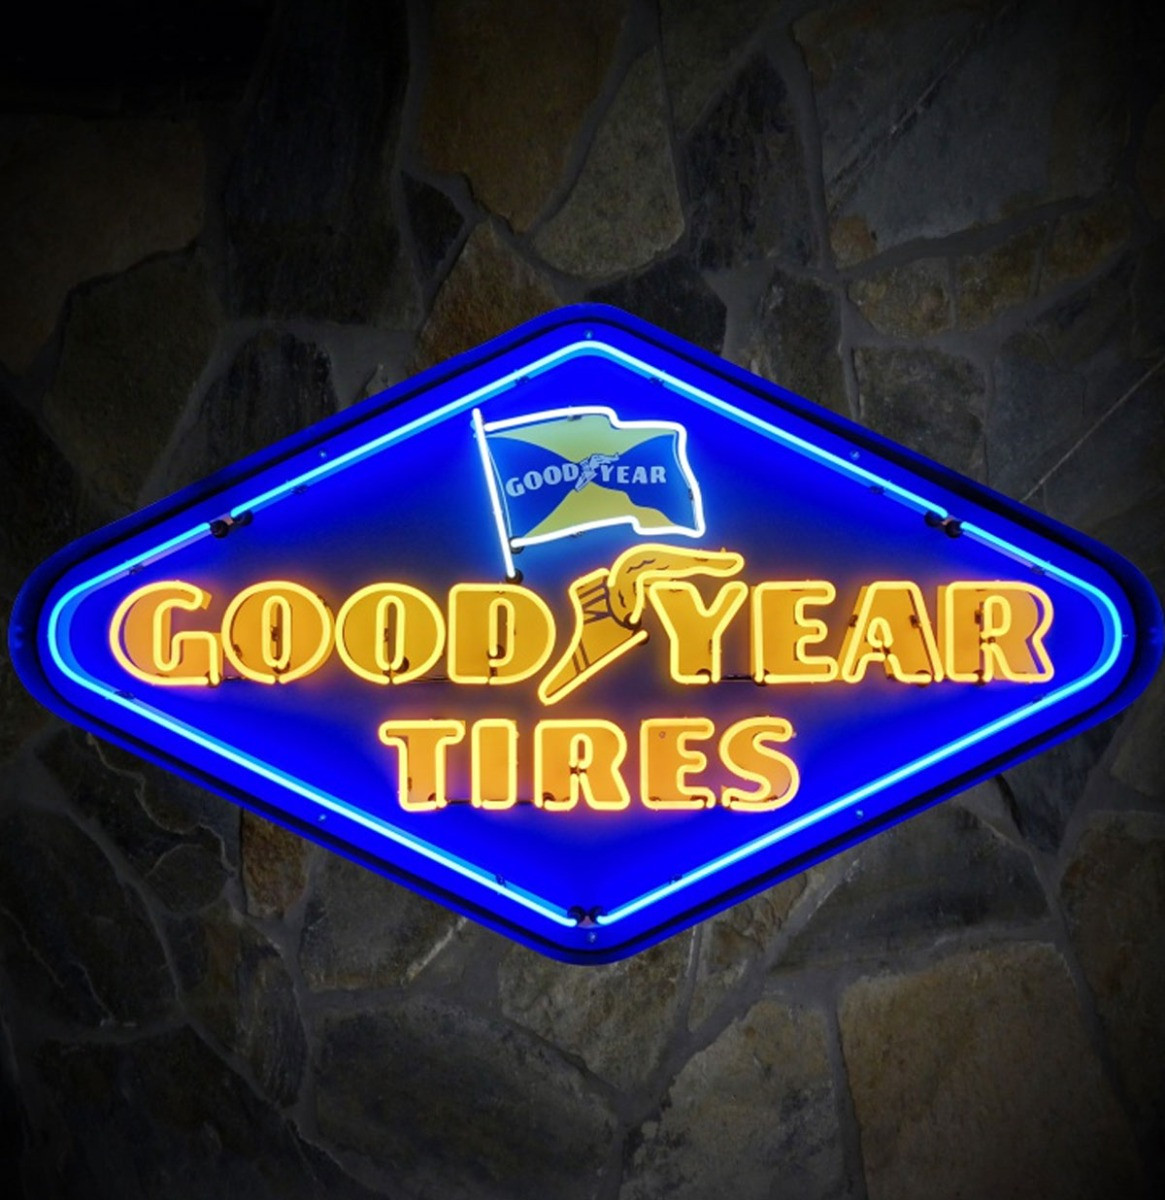 Goodyear Tires Neon Verlichting XL In Metalen Behuizing - 152 x 52 cm